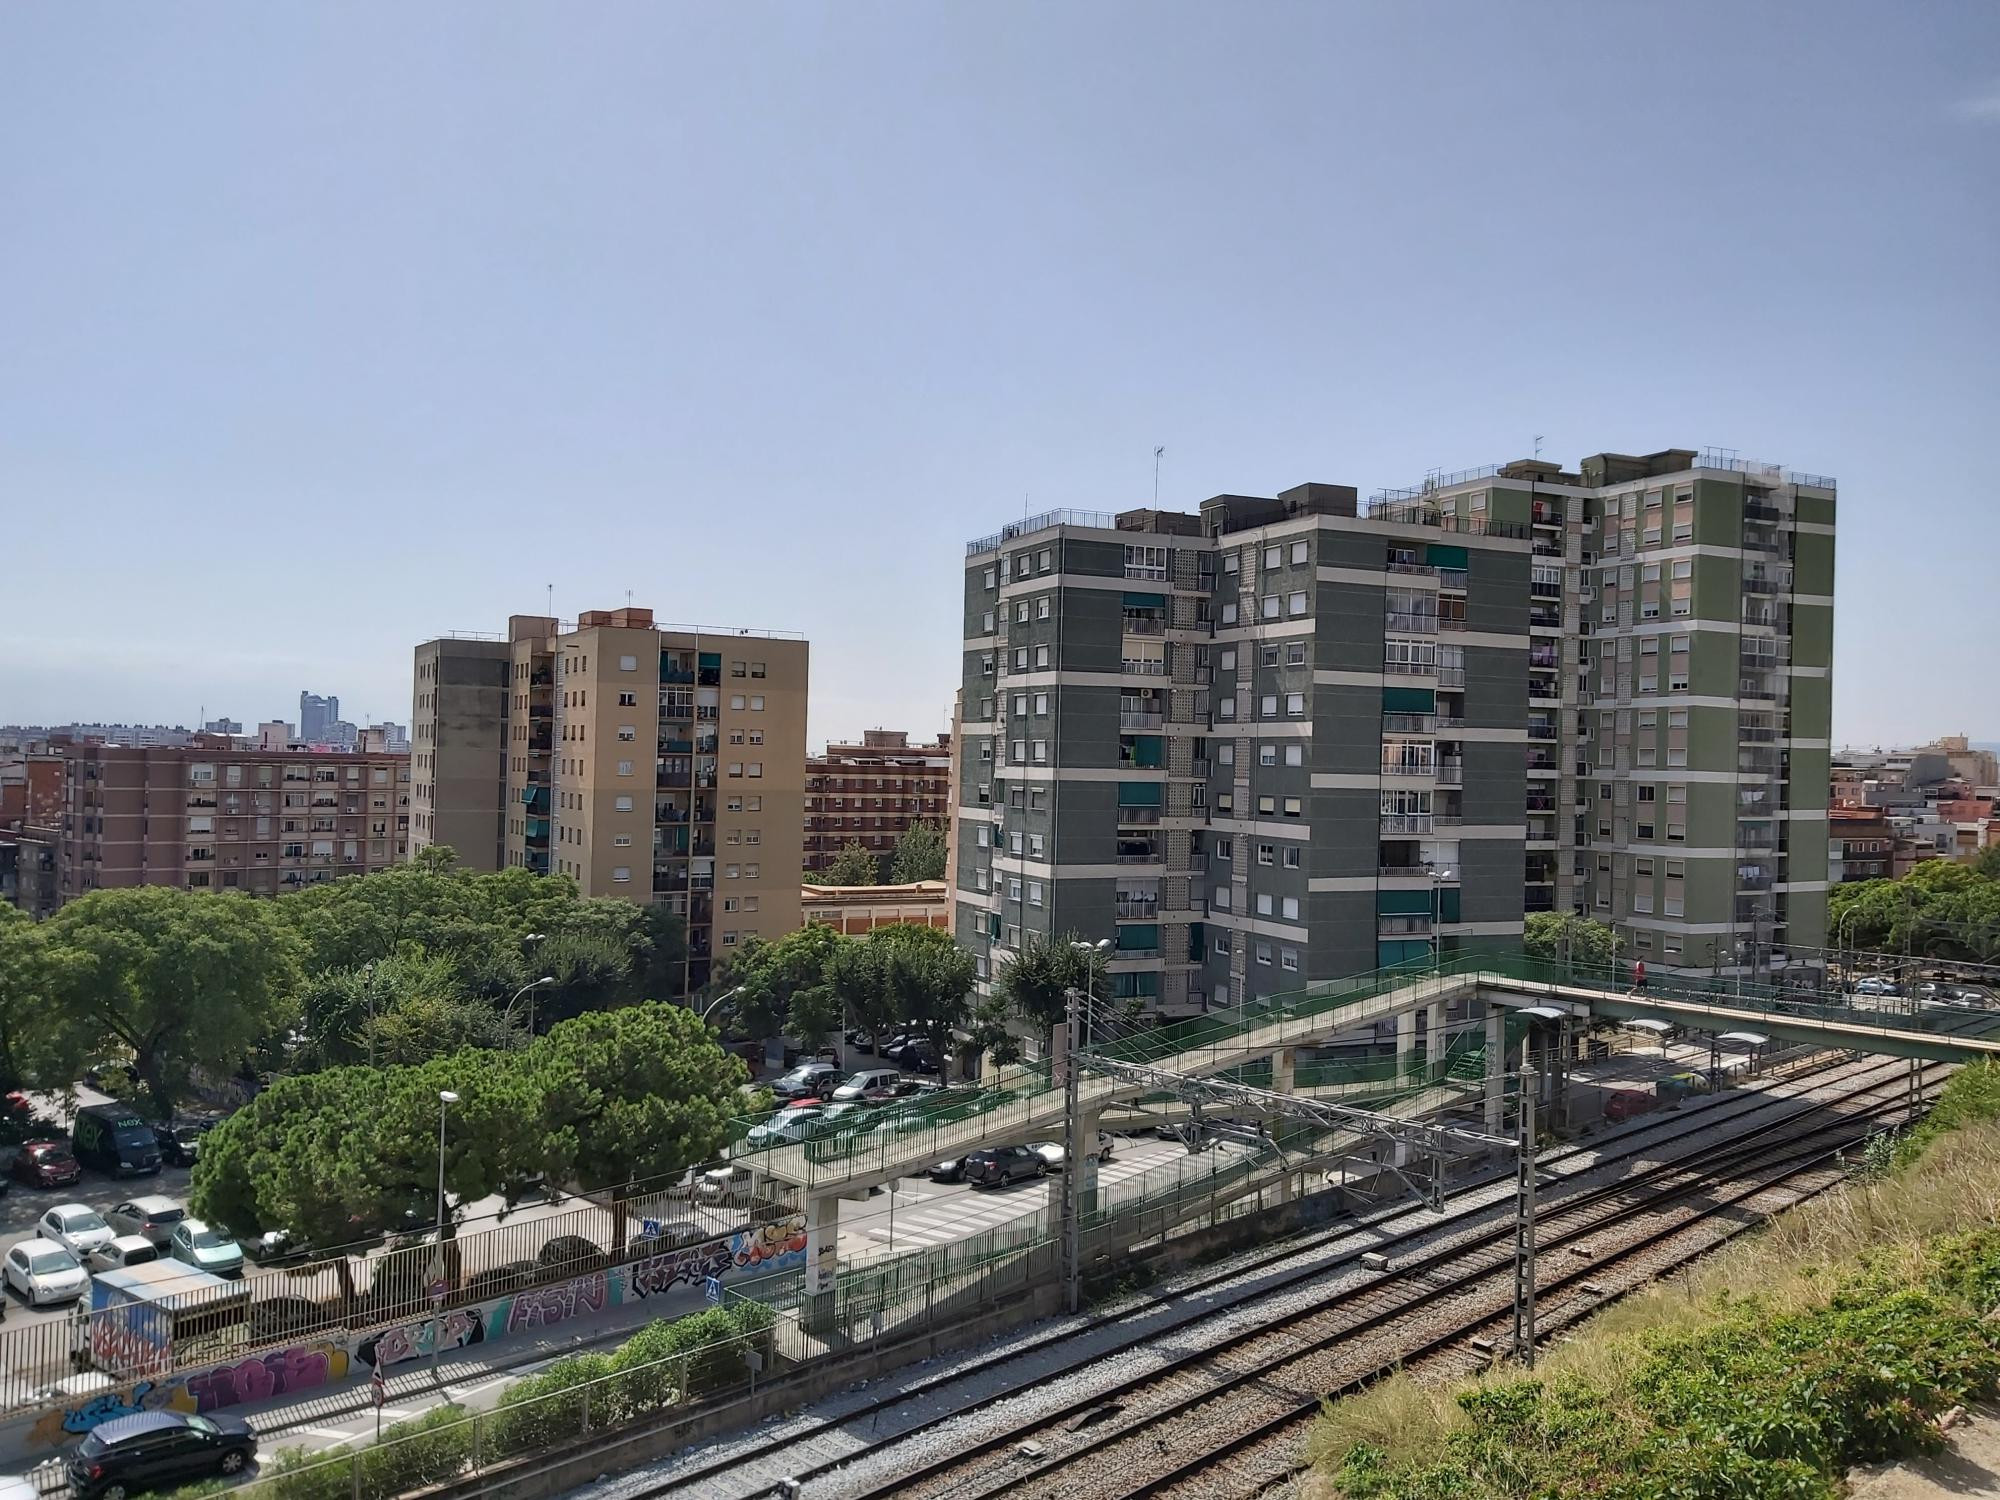 Las vías del tren son una gran barrera física en L'Hospitalet de Llobregat / ARCHIVO